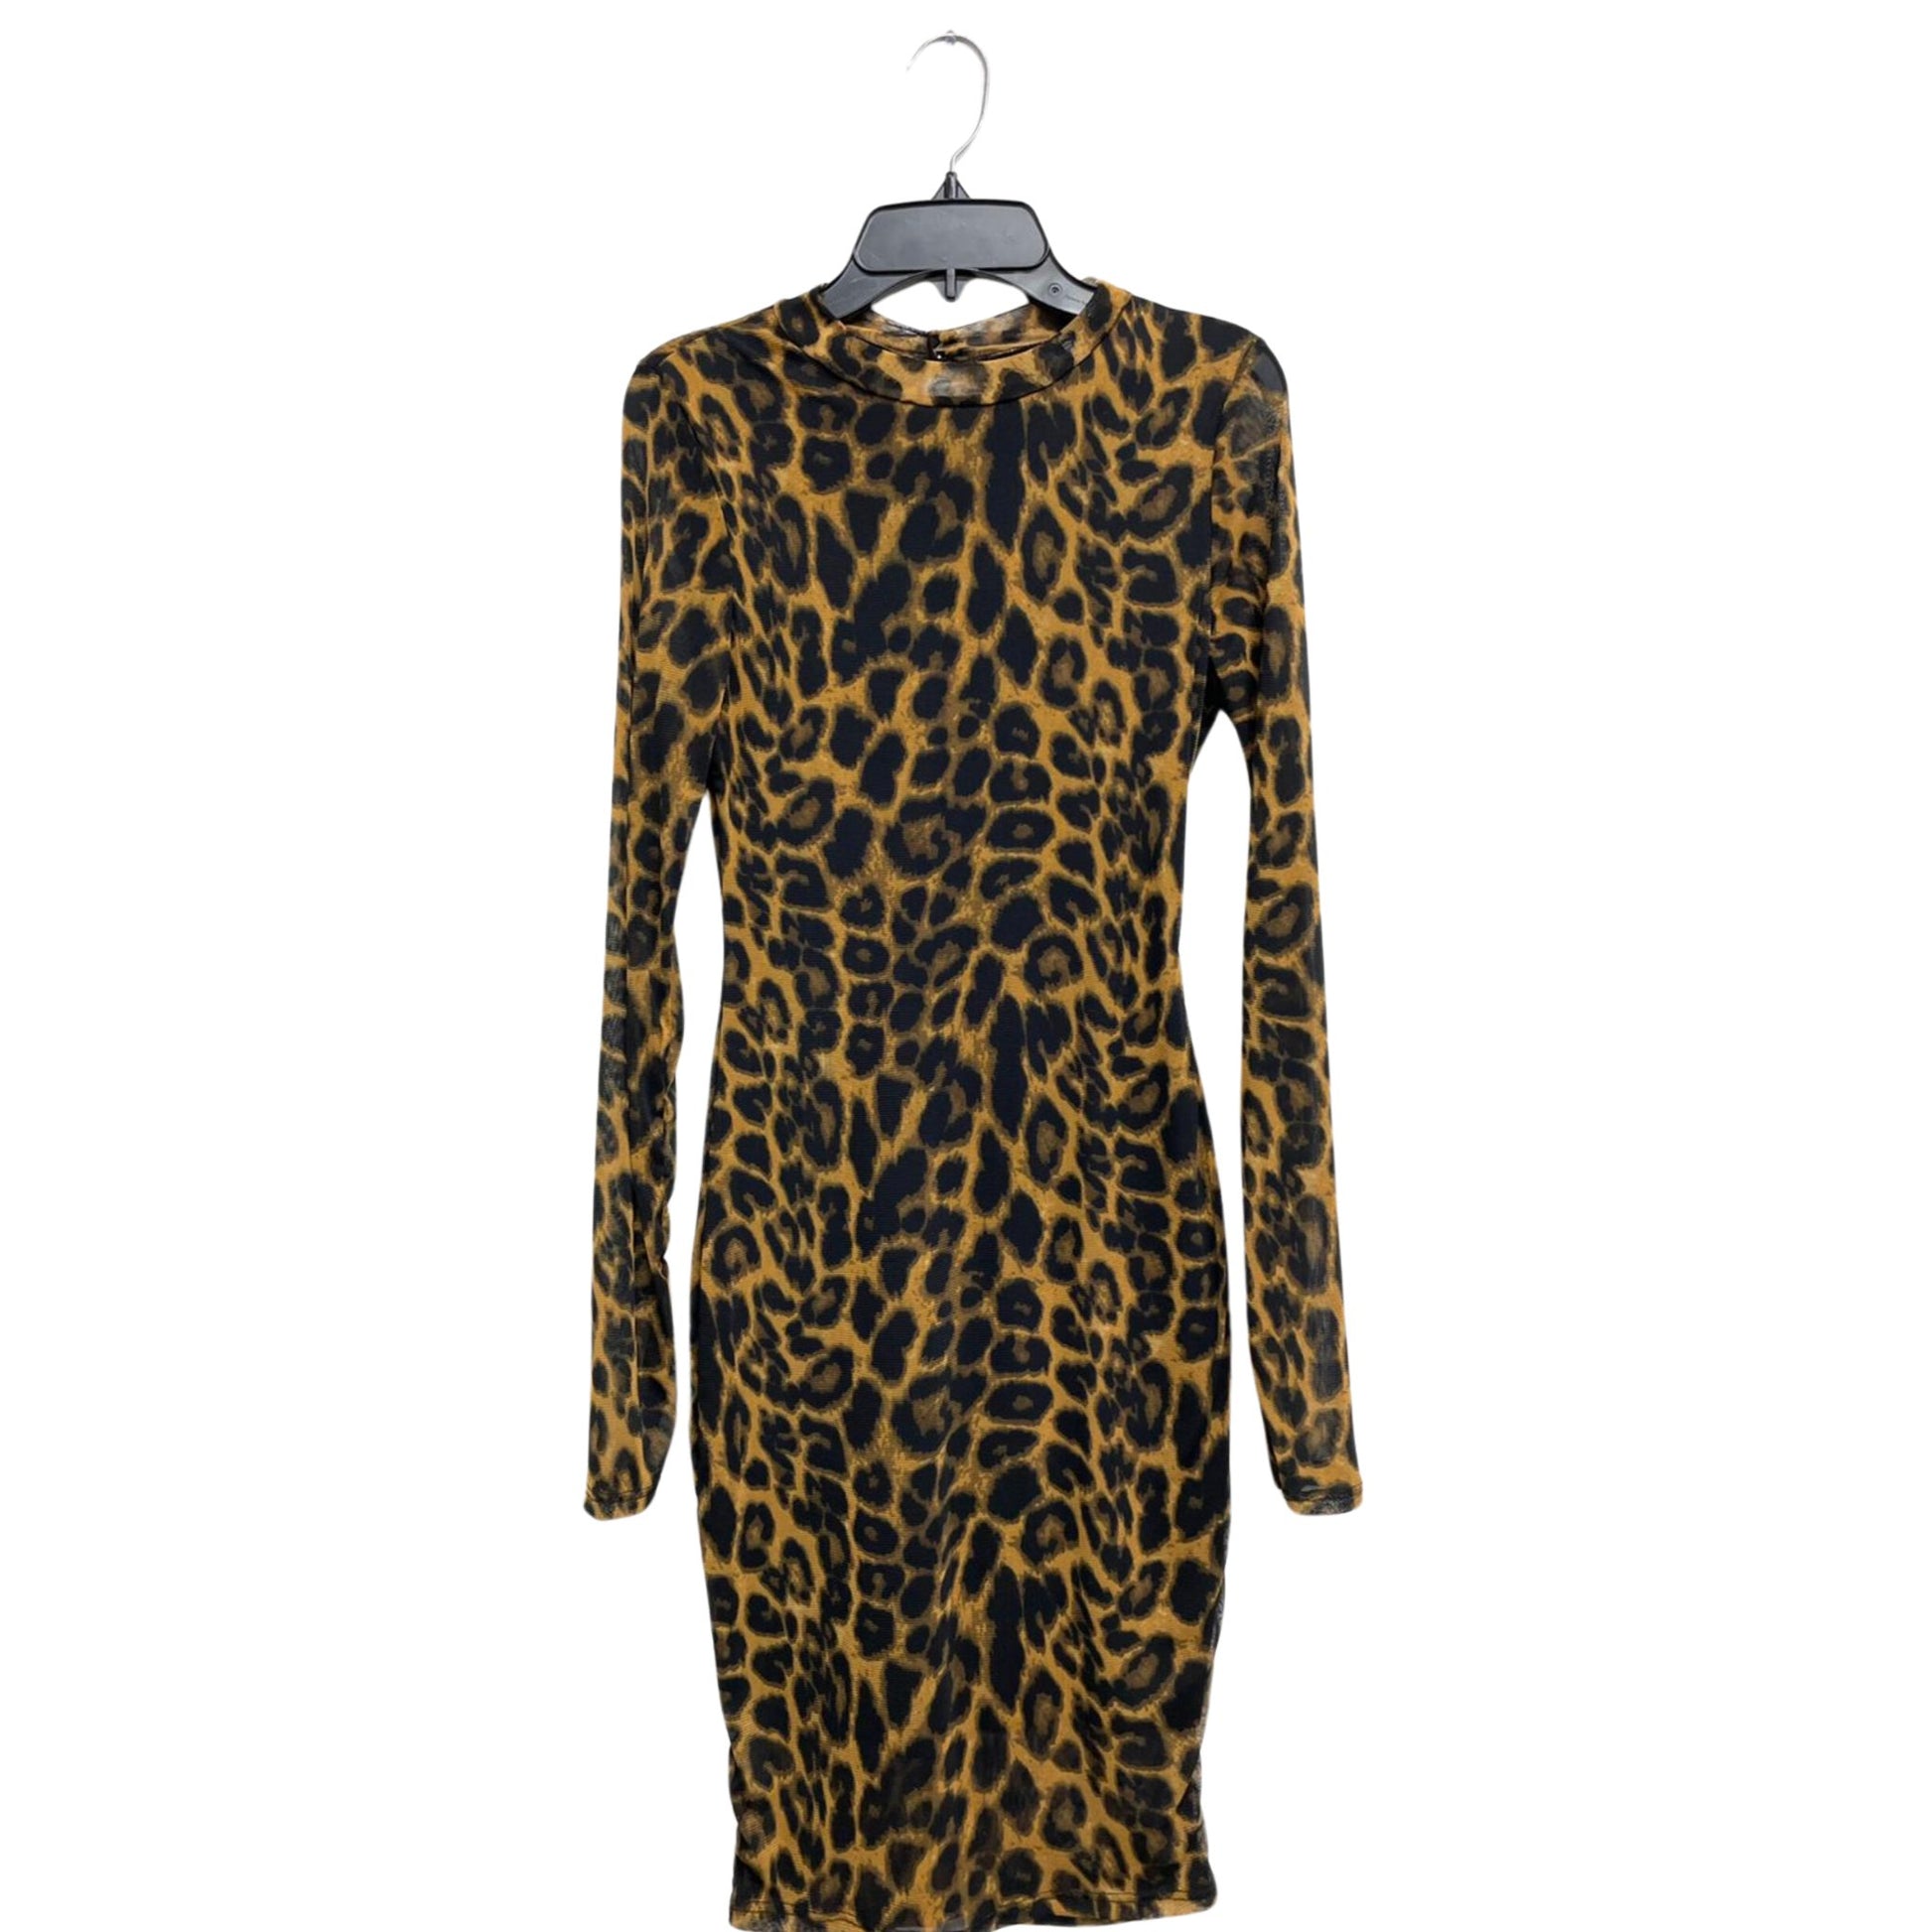 Leopard mesh dress - Lavish life LLC 